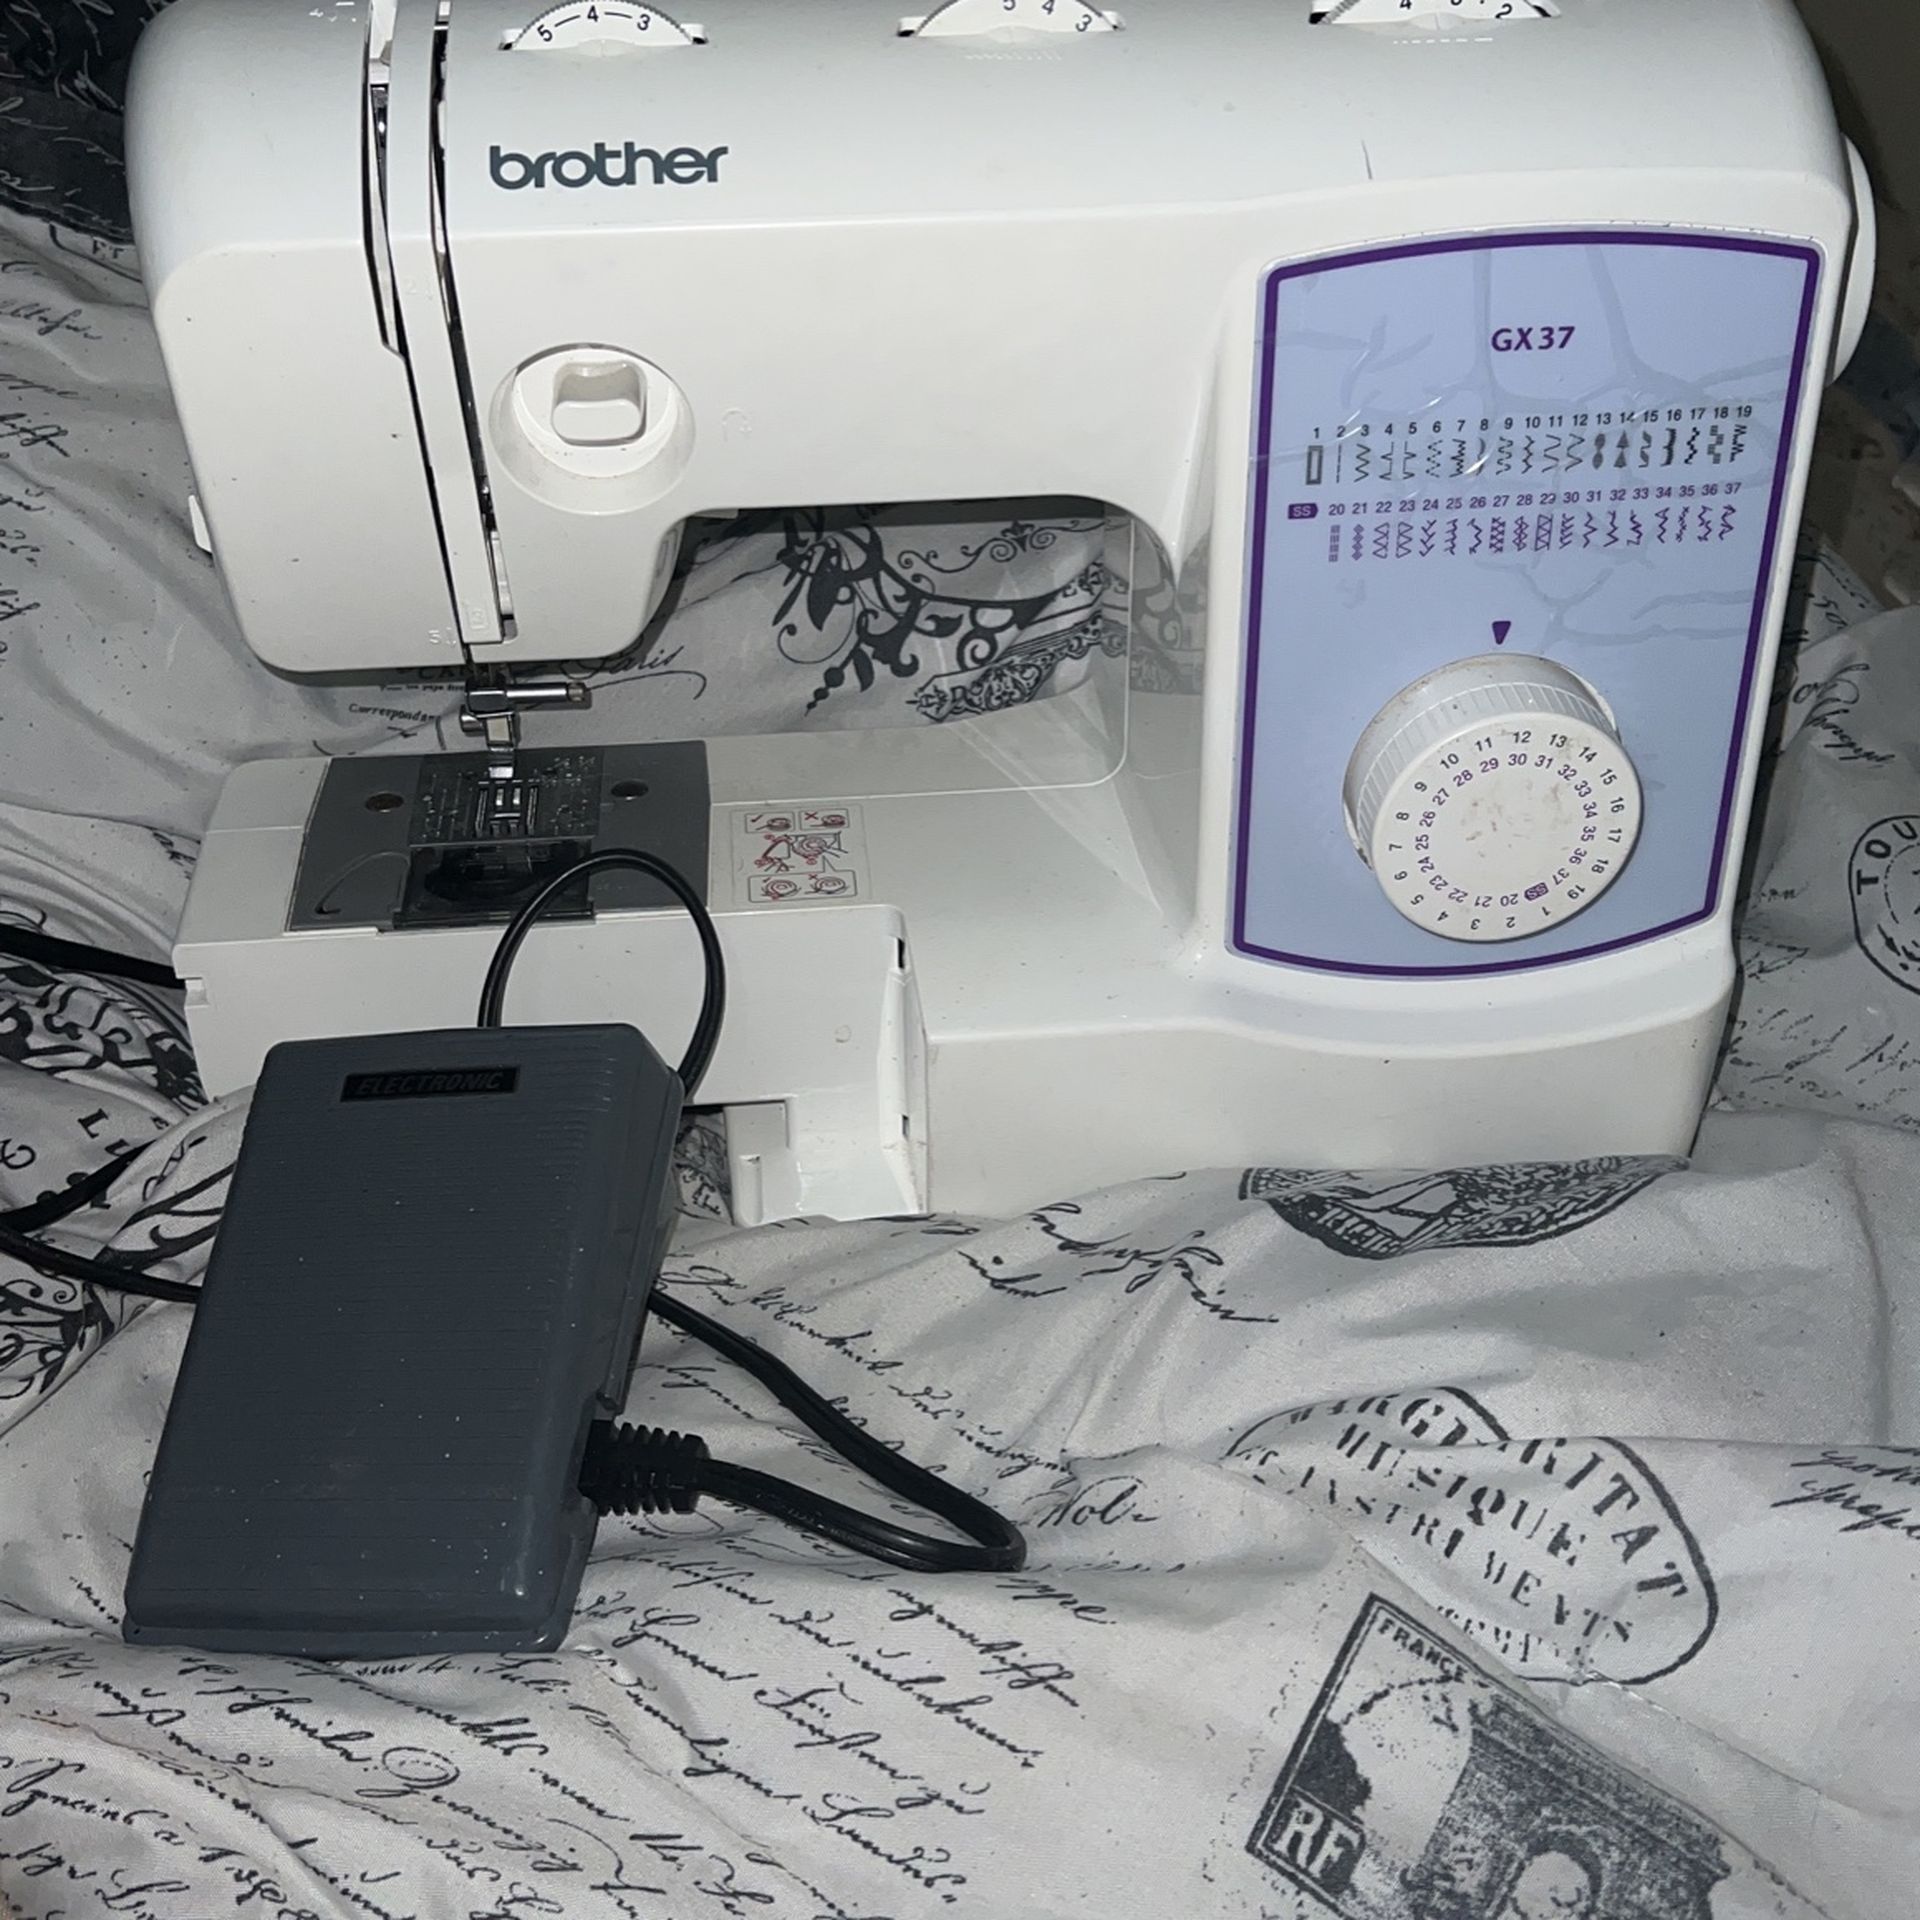 brother GX37 sewing machine 